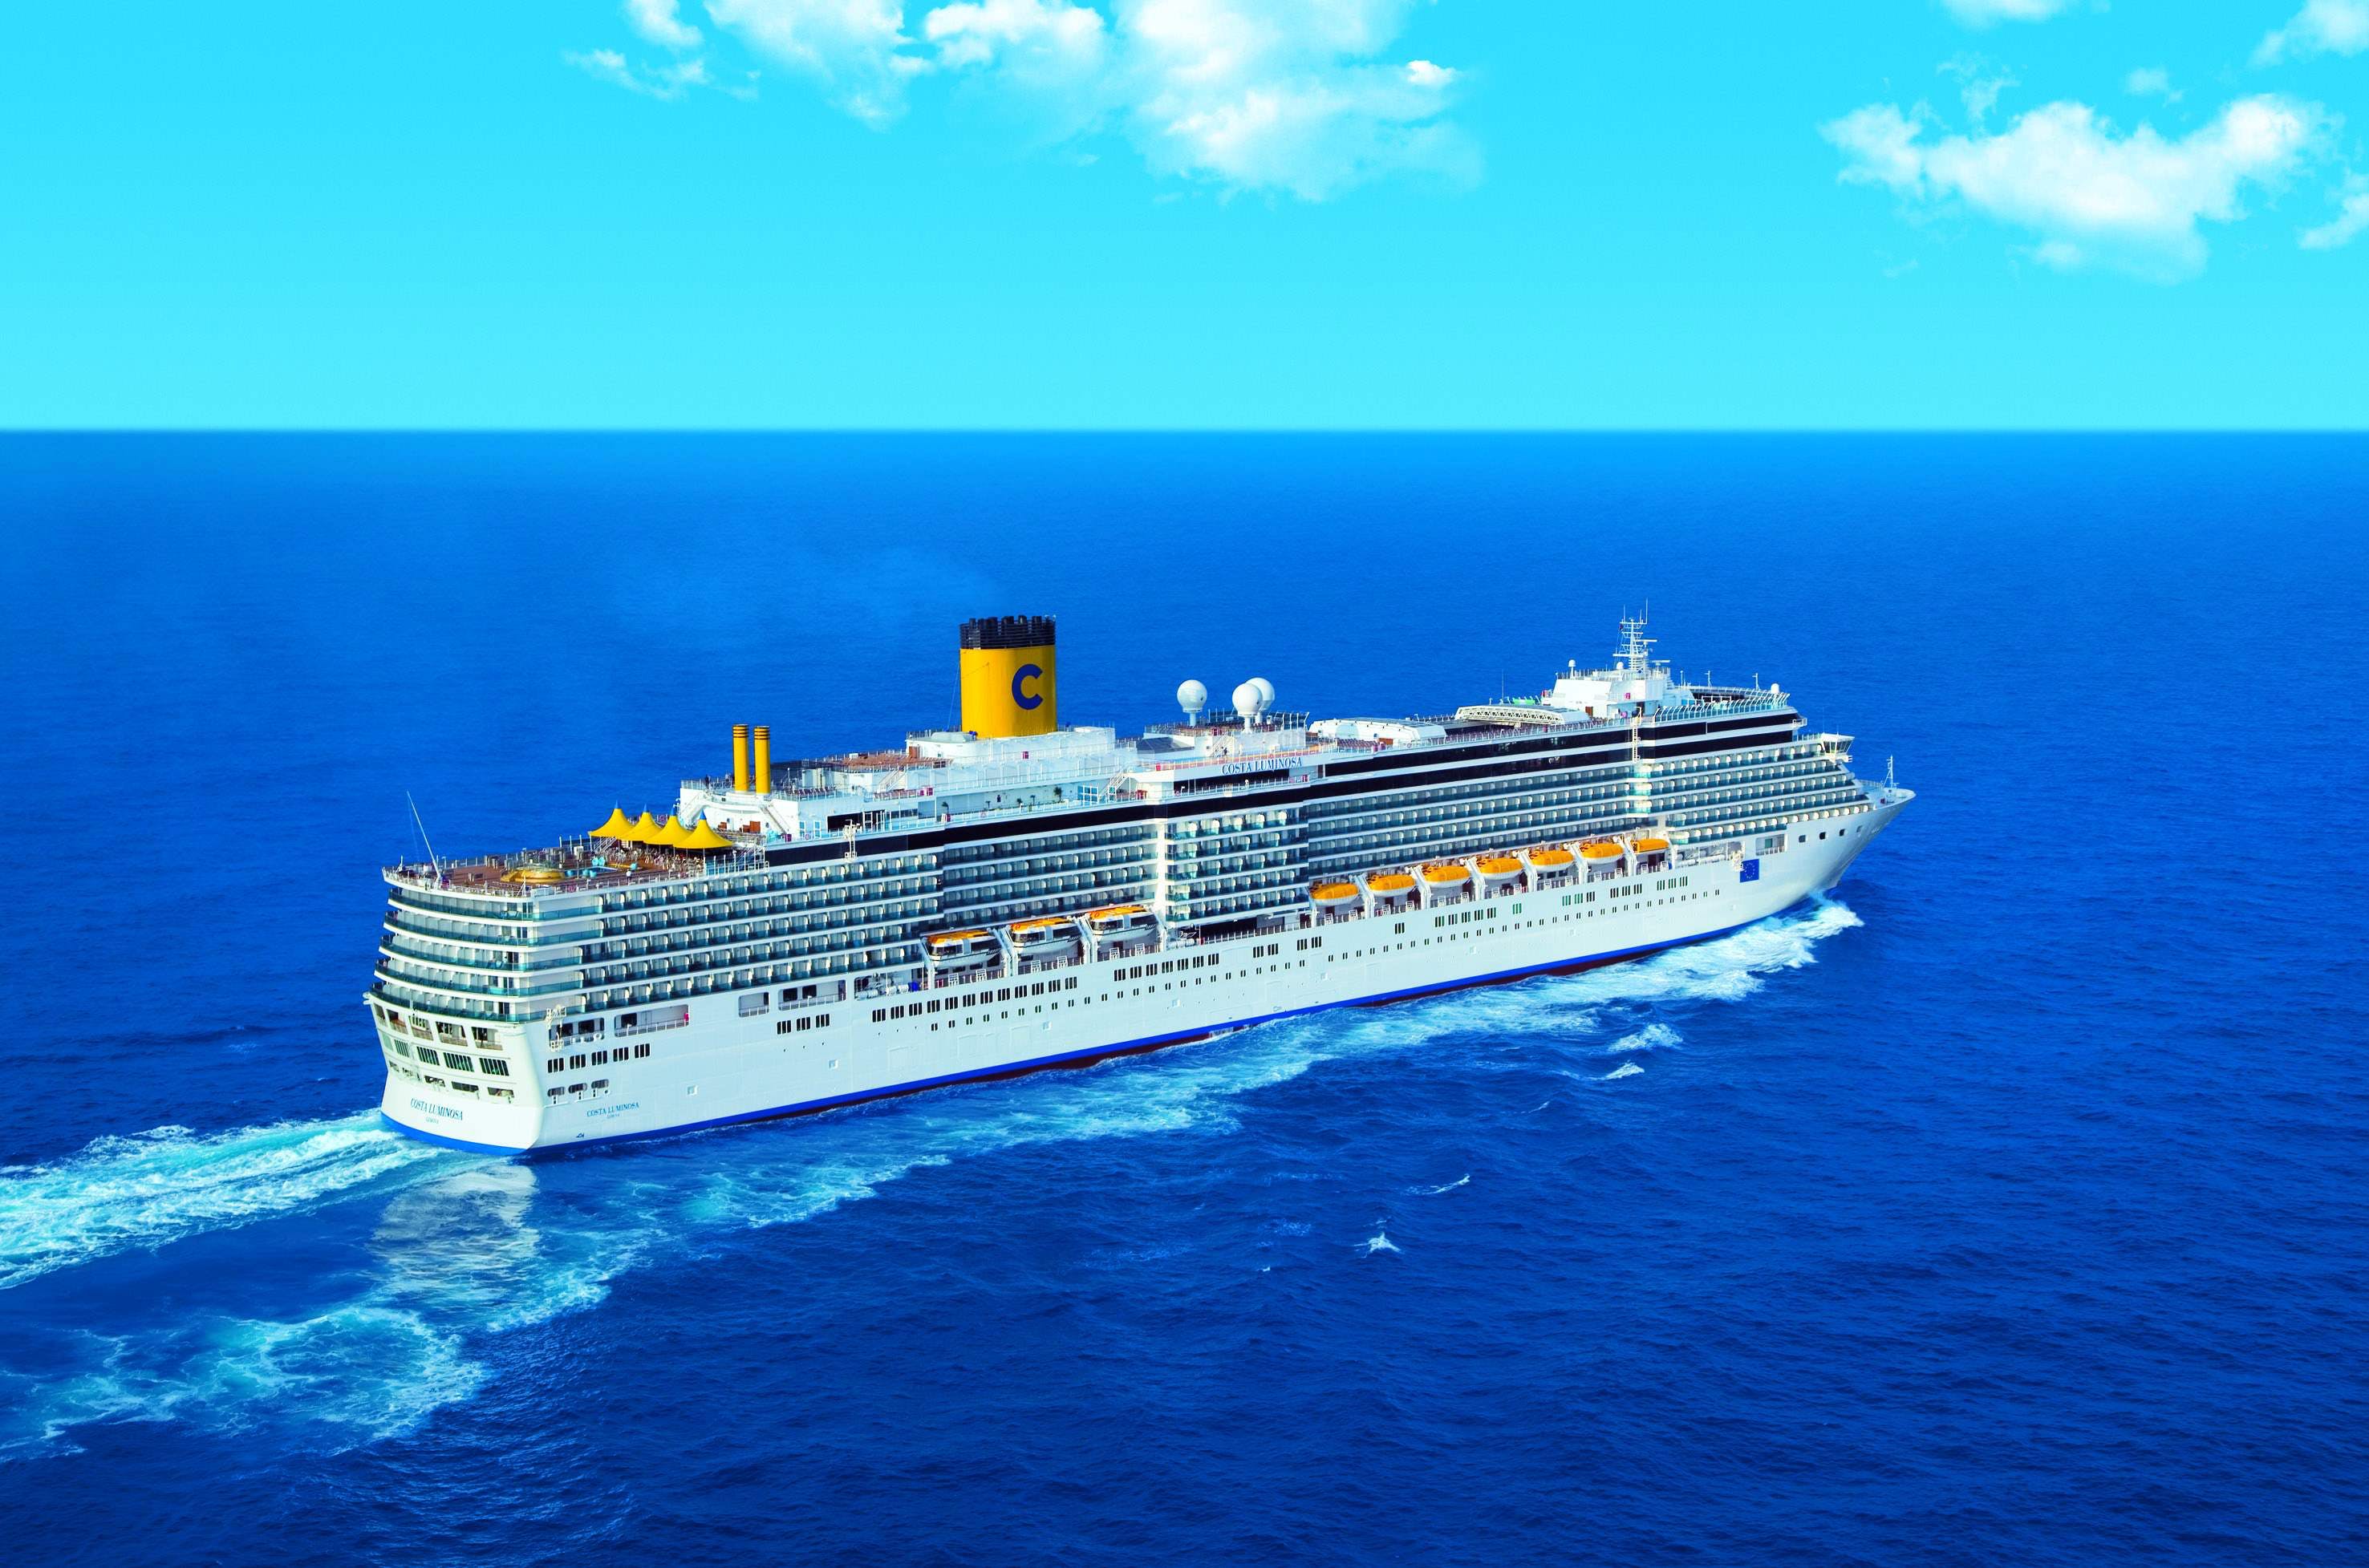 Cruise ship,Water transportation,Passenger ship,Ship,Vehicle,Naval architecture,Cruiseferry,Ocean liner,Ferry,Watercraft